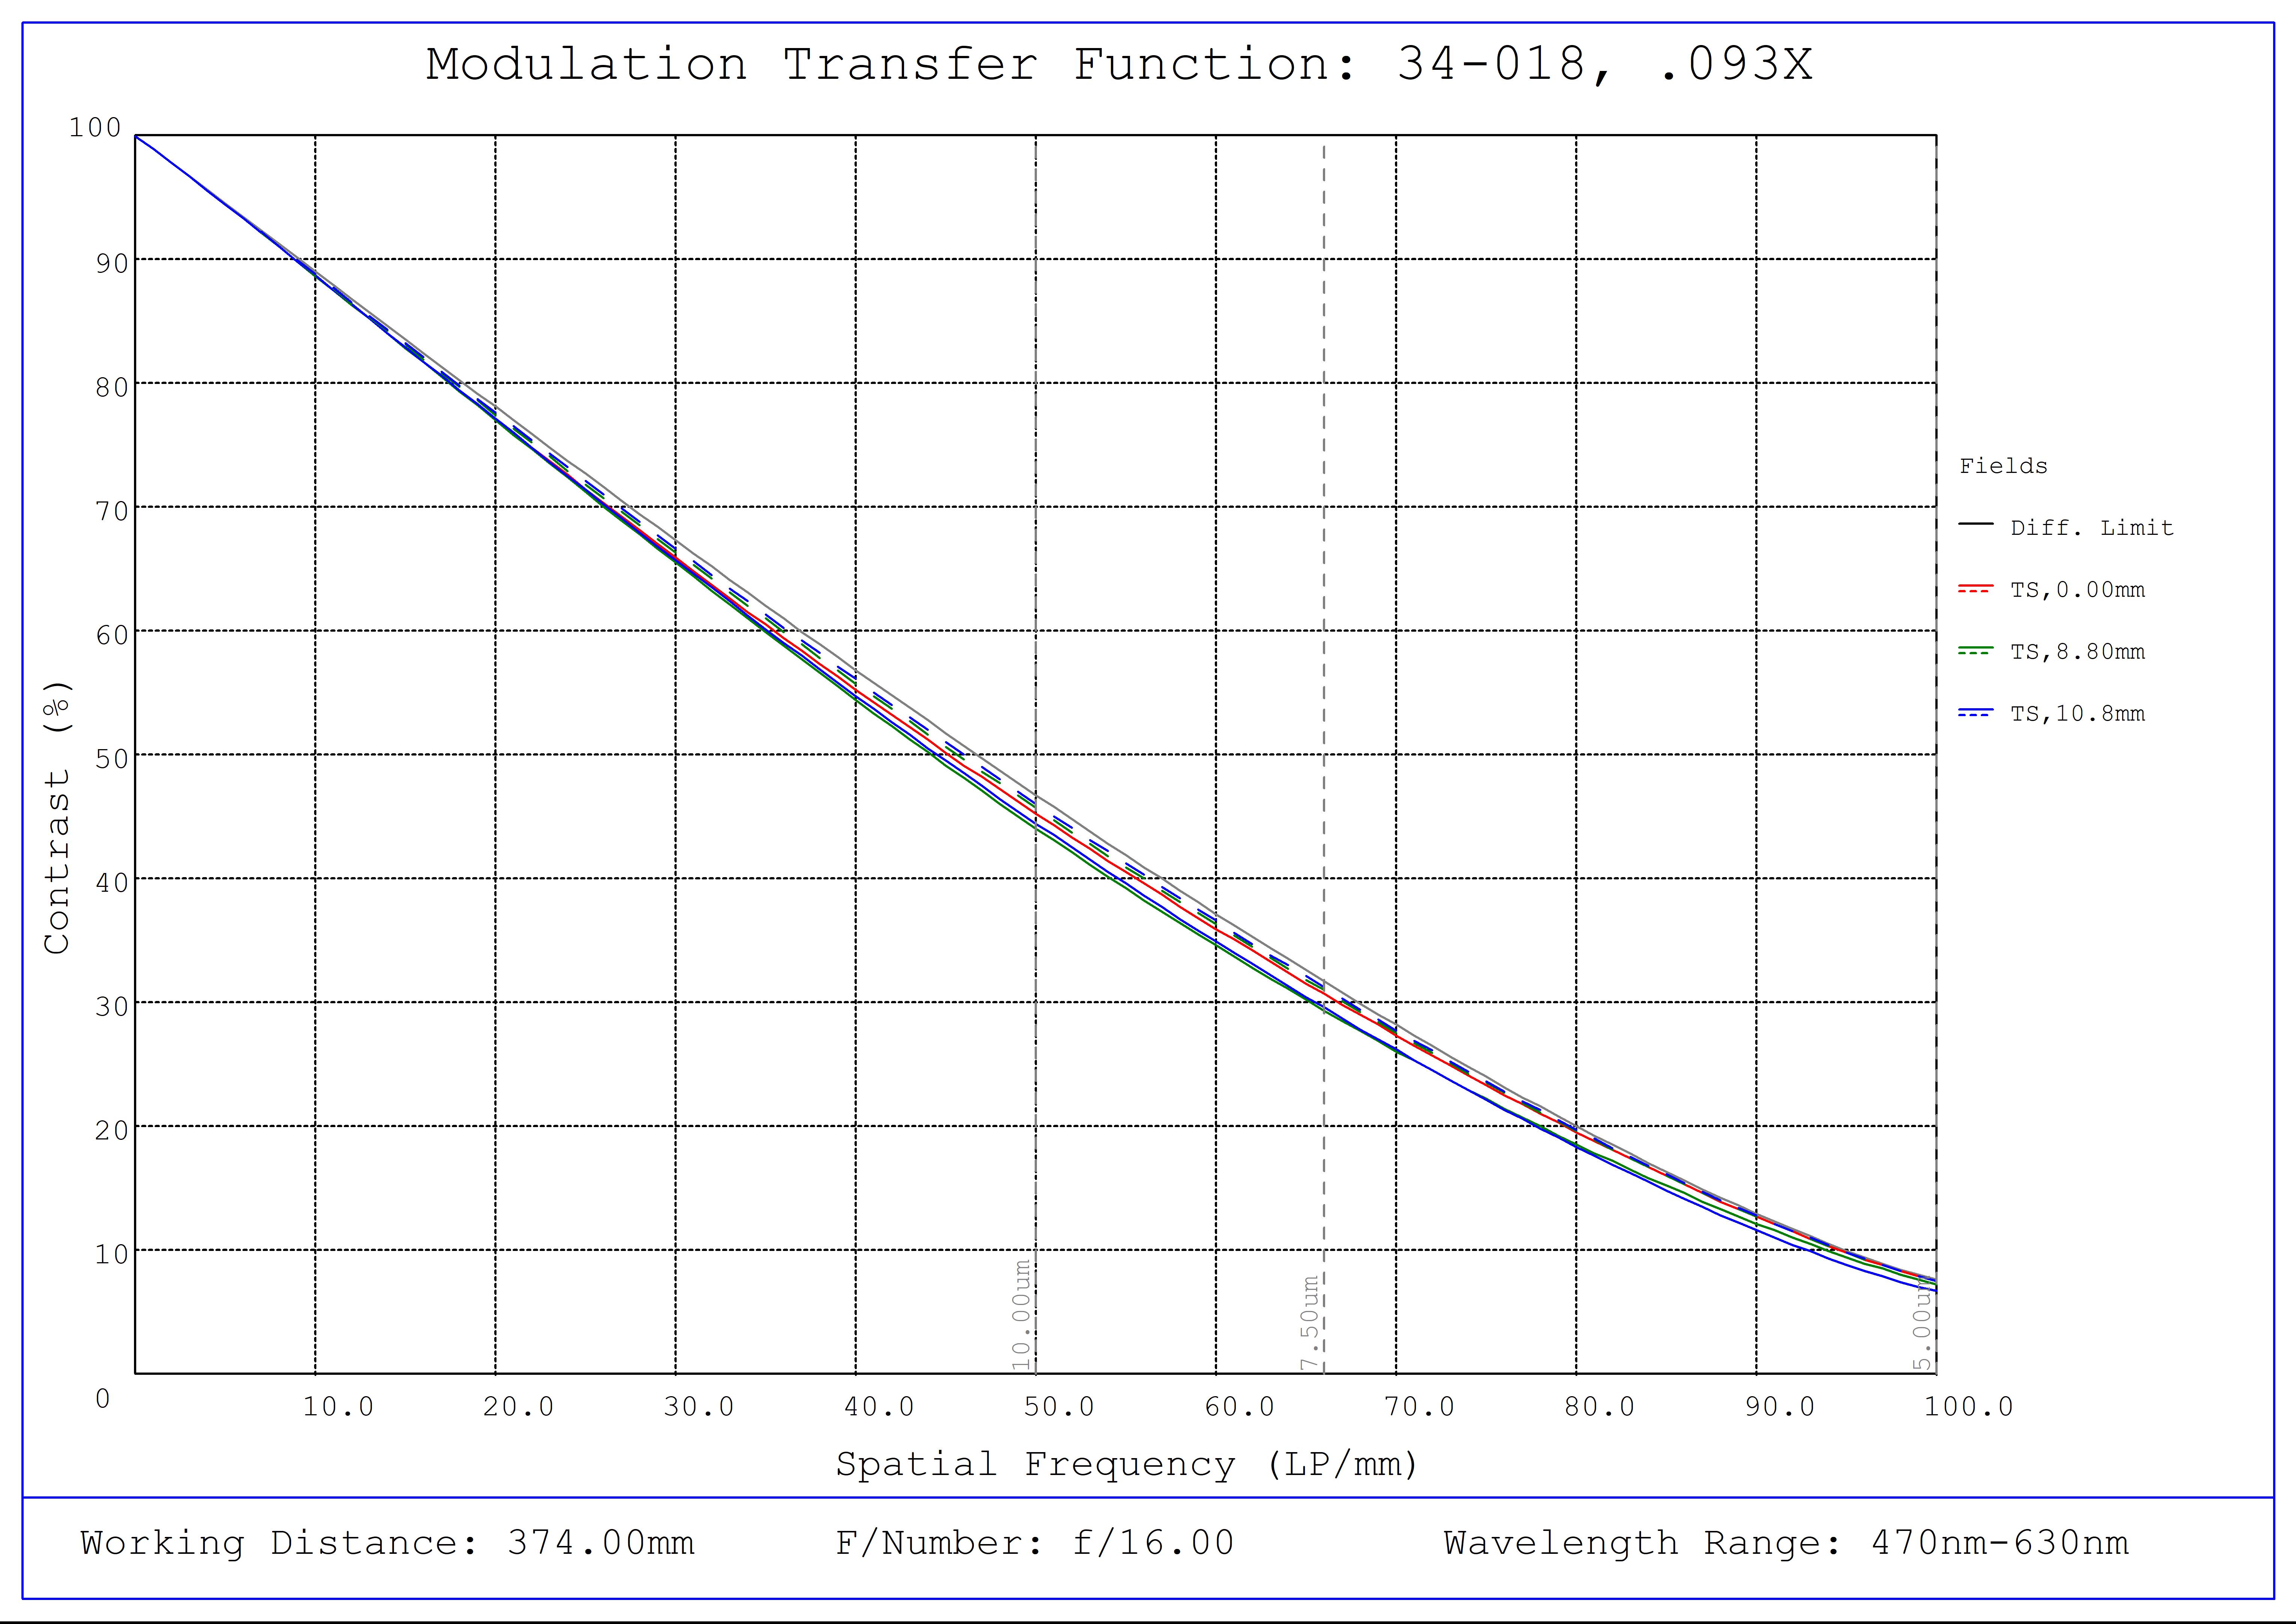 #34-018, 0.093X, 4/3" C-Mount TitanTL® Telecentric Lens, Modulated Transfer Function (MTF) Plot, 374mm Working Distance, f16